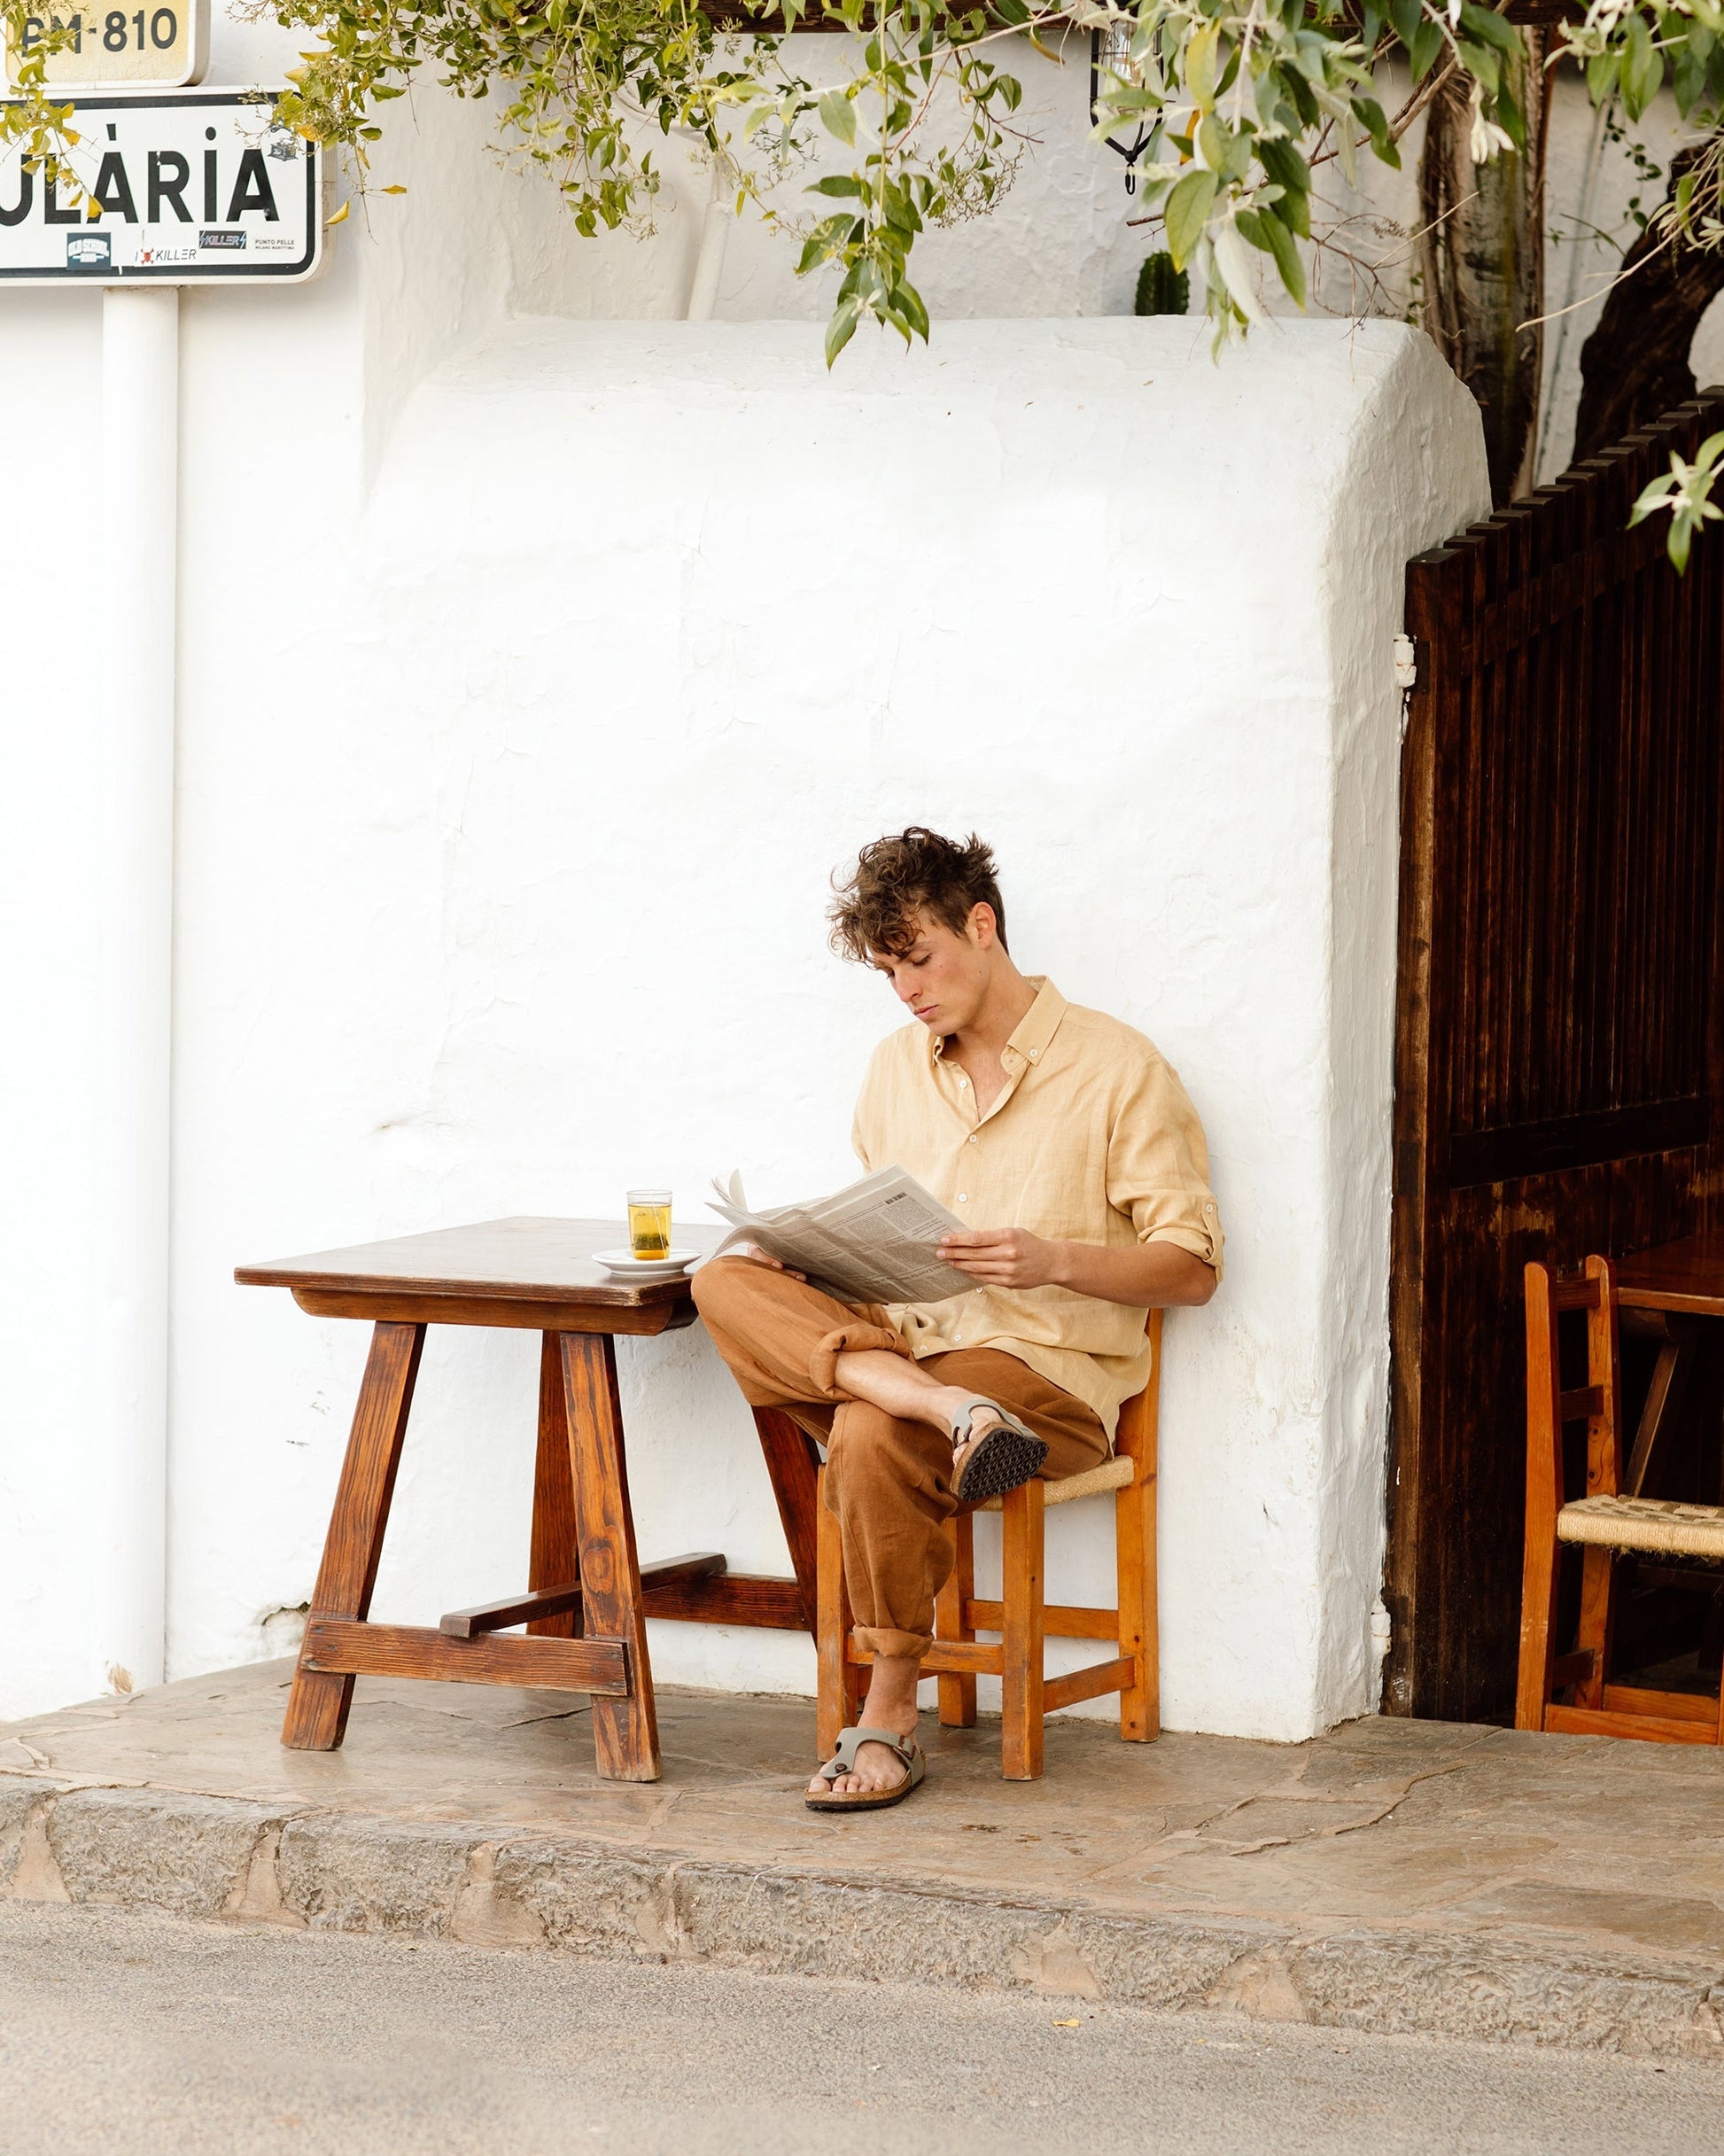 Men's linen shirt CORONADO in sandy beige - MagicLinen